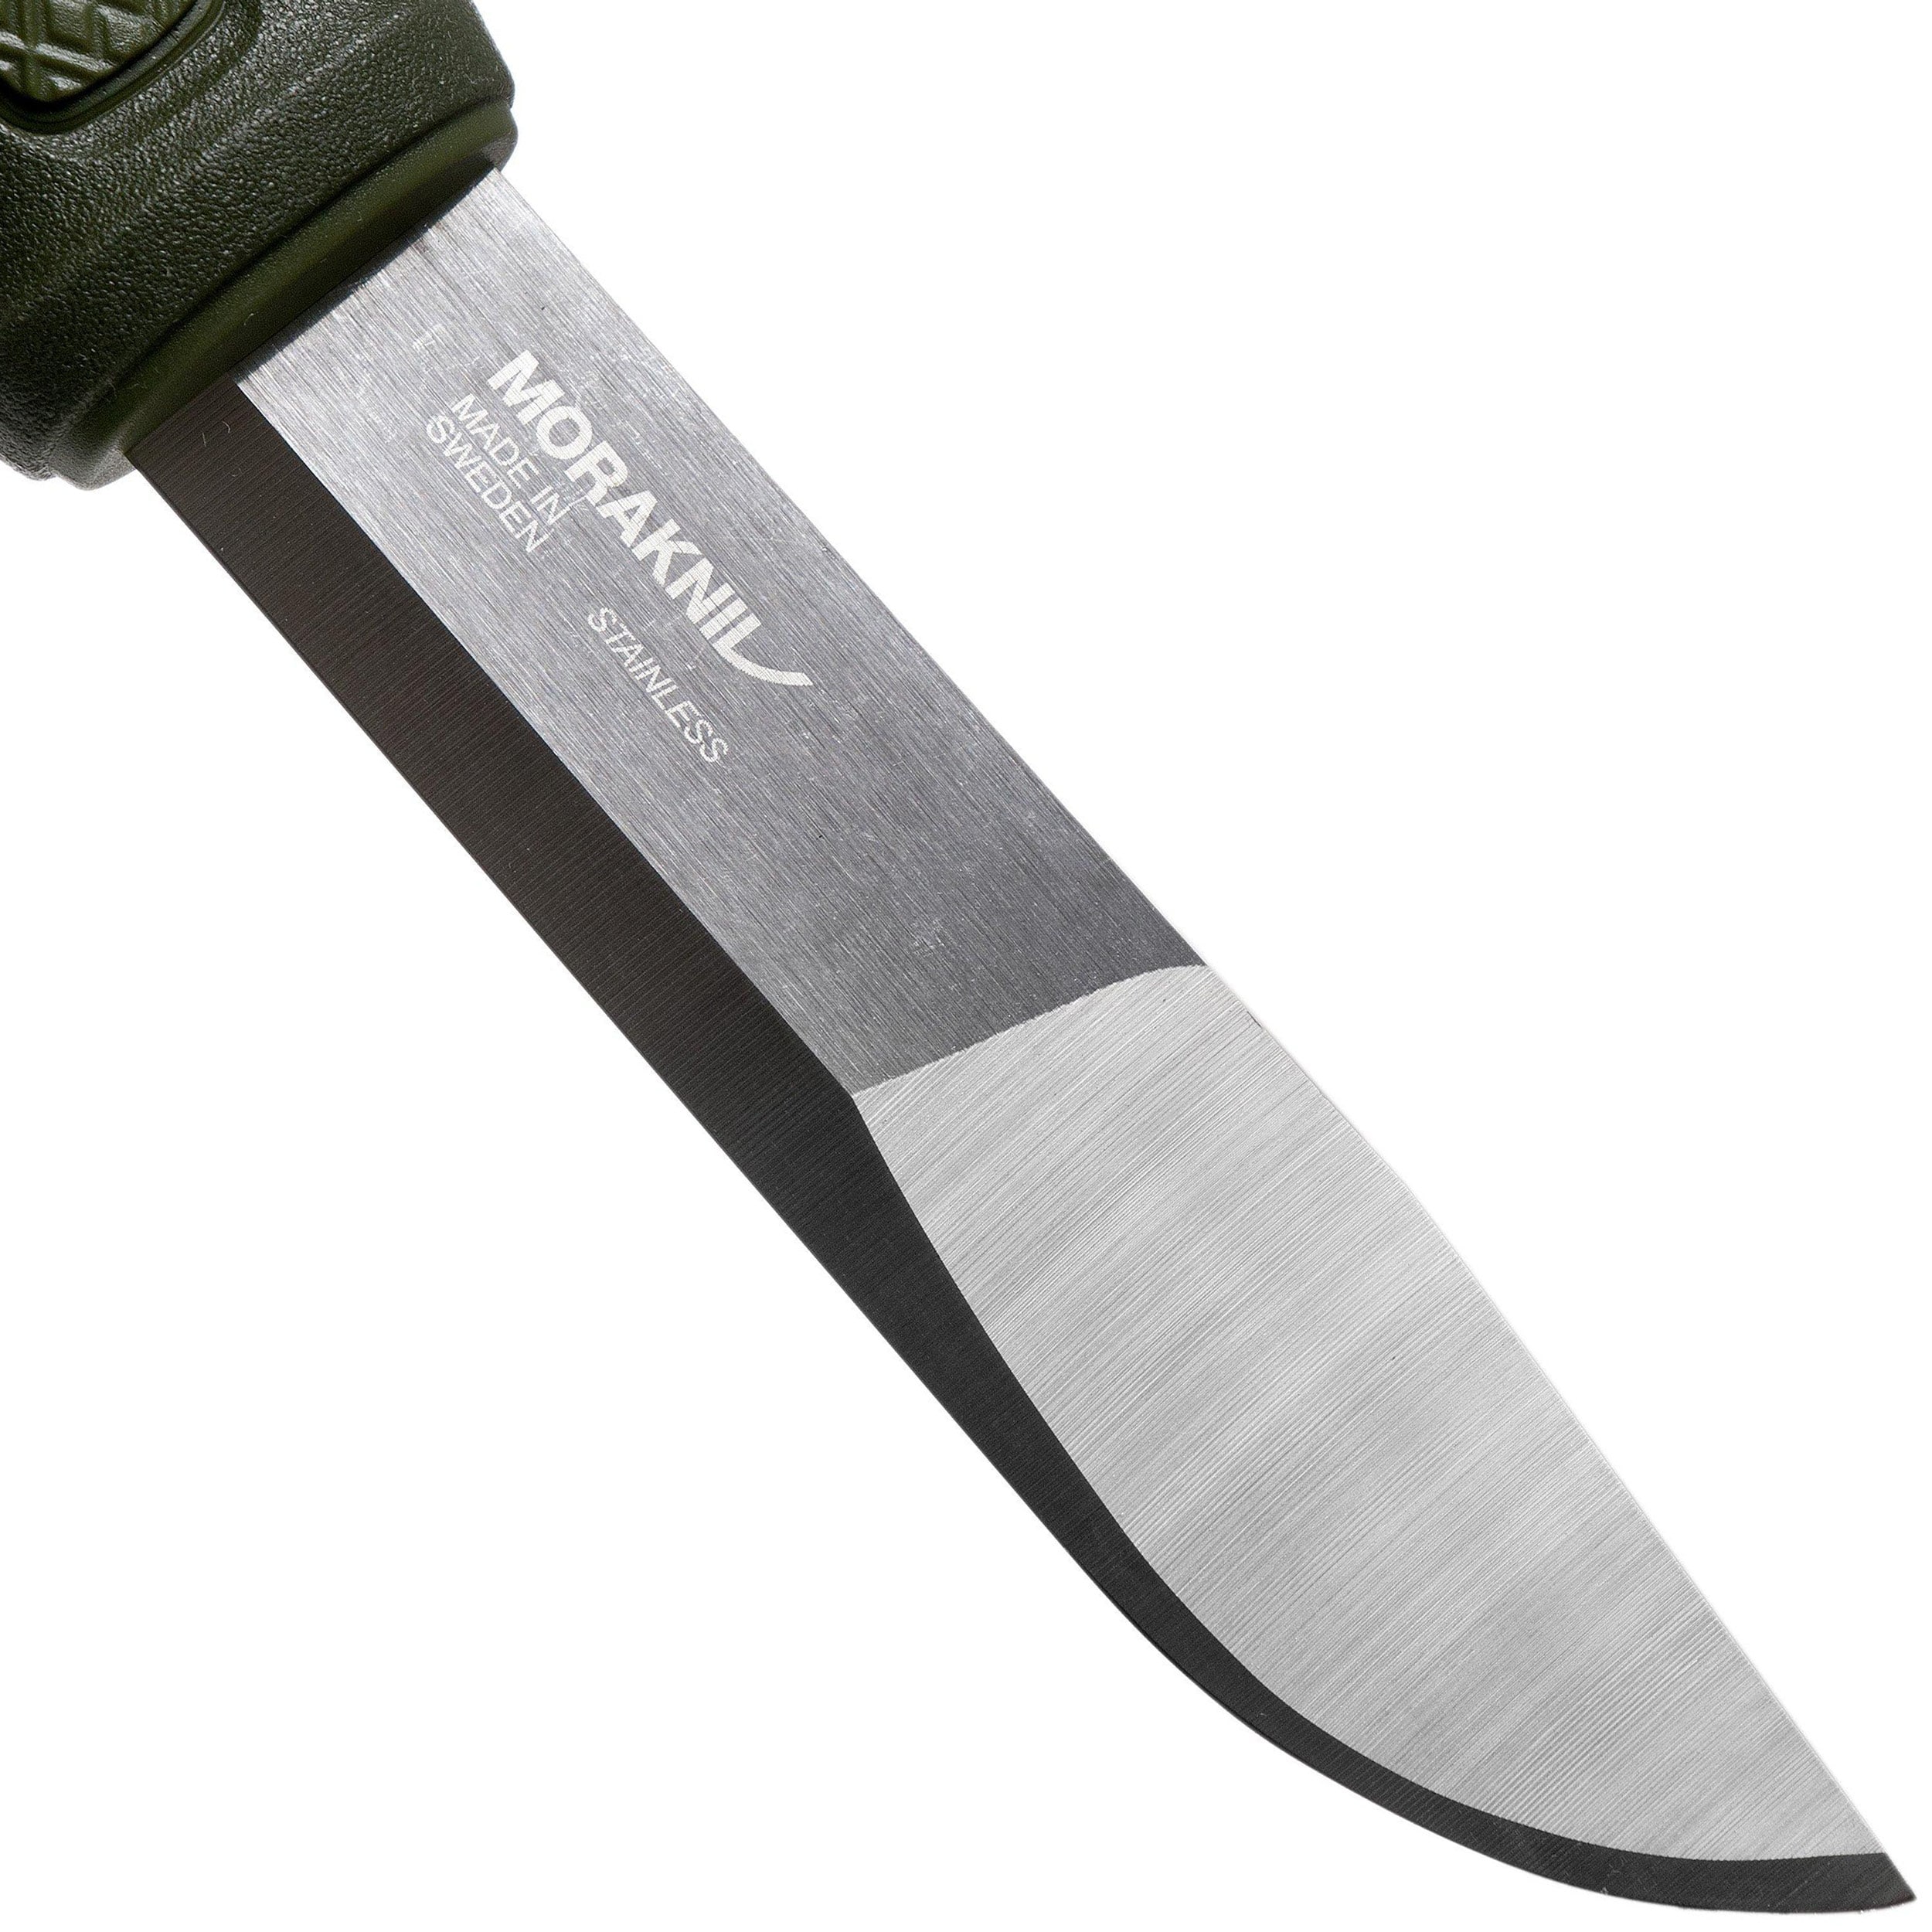 Nóż Mora Kansbol z zestawem survivalowym - Green